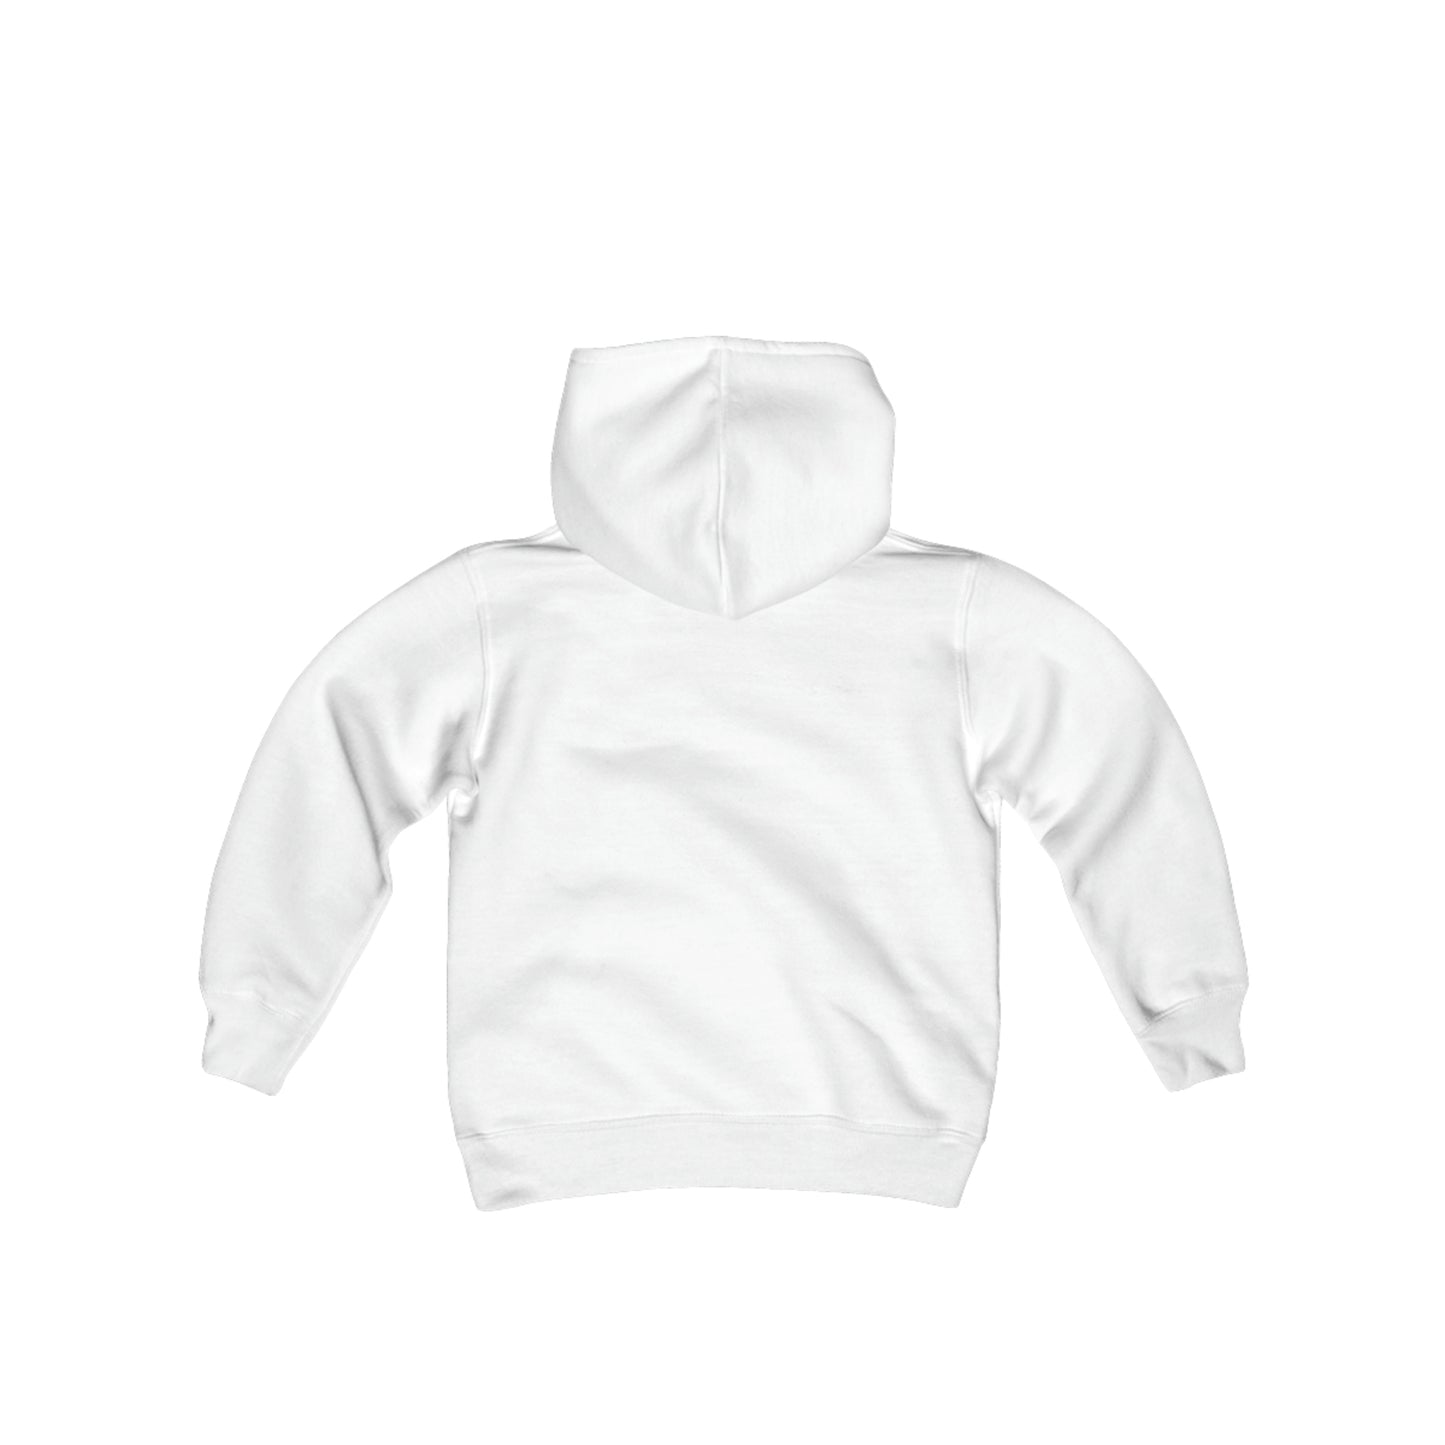 Baby Dice - Youth Heavy Blend Hooded Sweatshirt